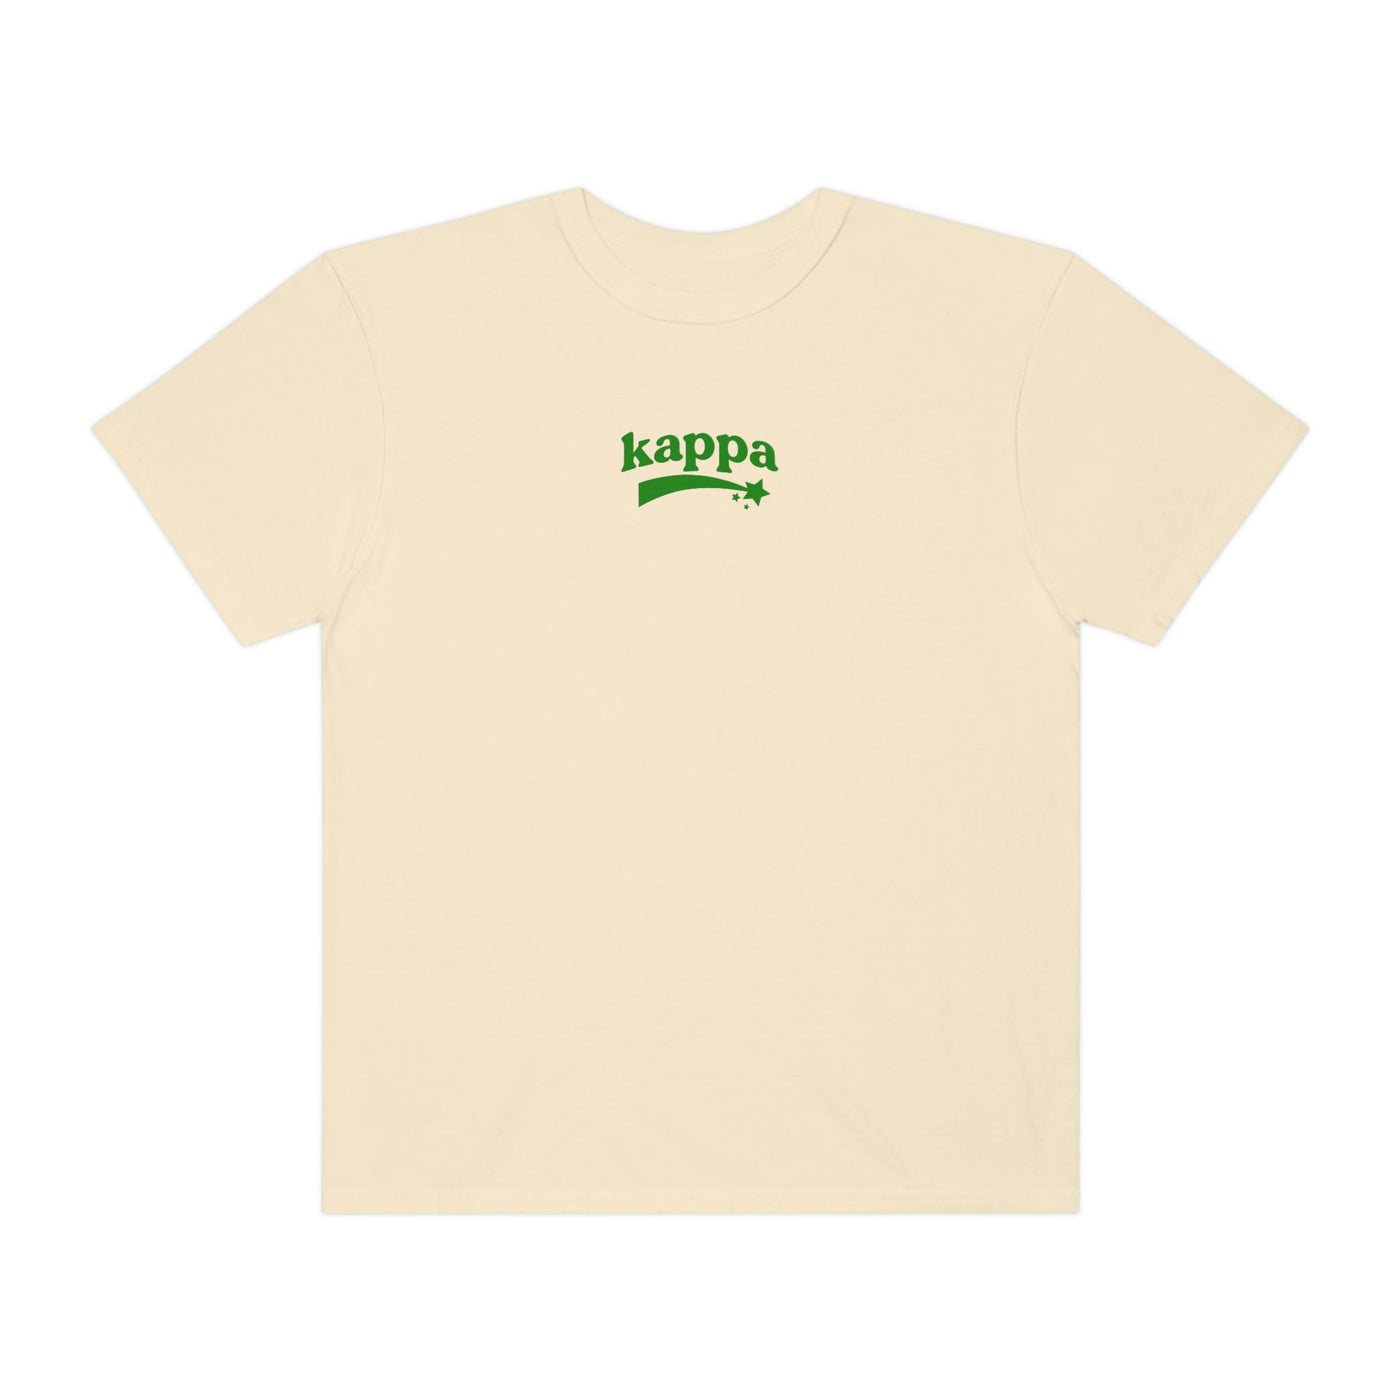 Kappa Kappa Gamma Planet T-shirt | Be Kind to the Planet Trendy Sorority shirt